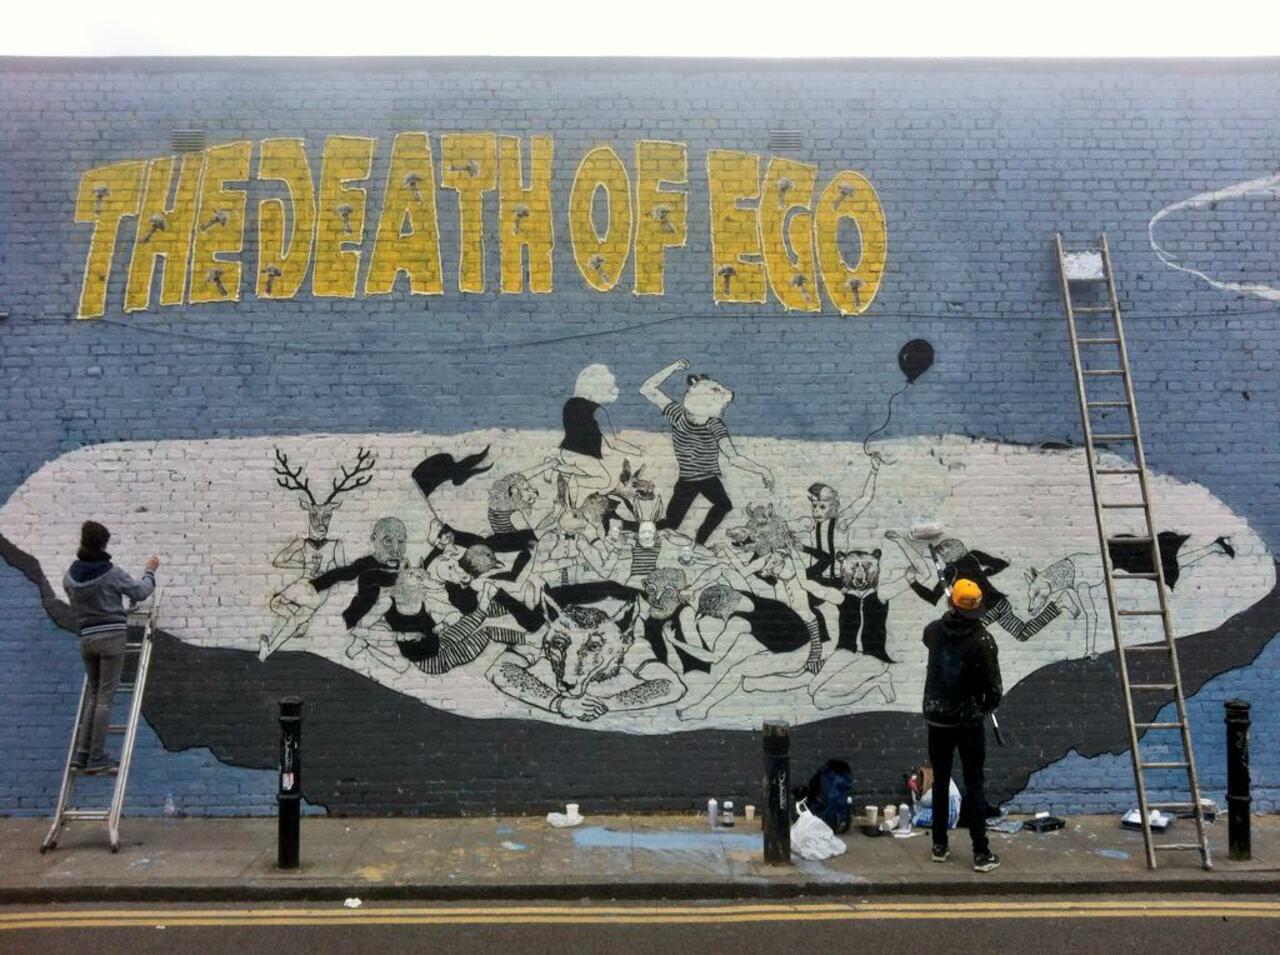 The Death of Ego

New work by @hausofpang on Hanbury Street #art #streetart #graffiti http://t.co/yG9j6t0oZa